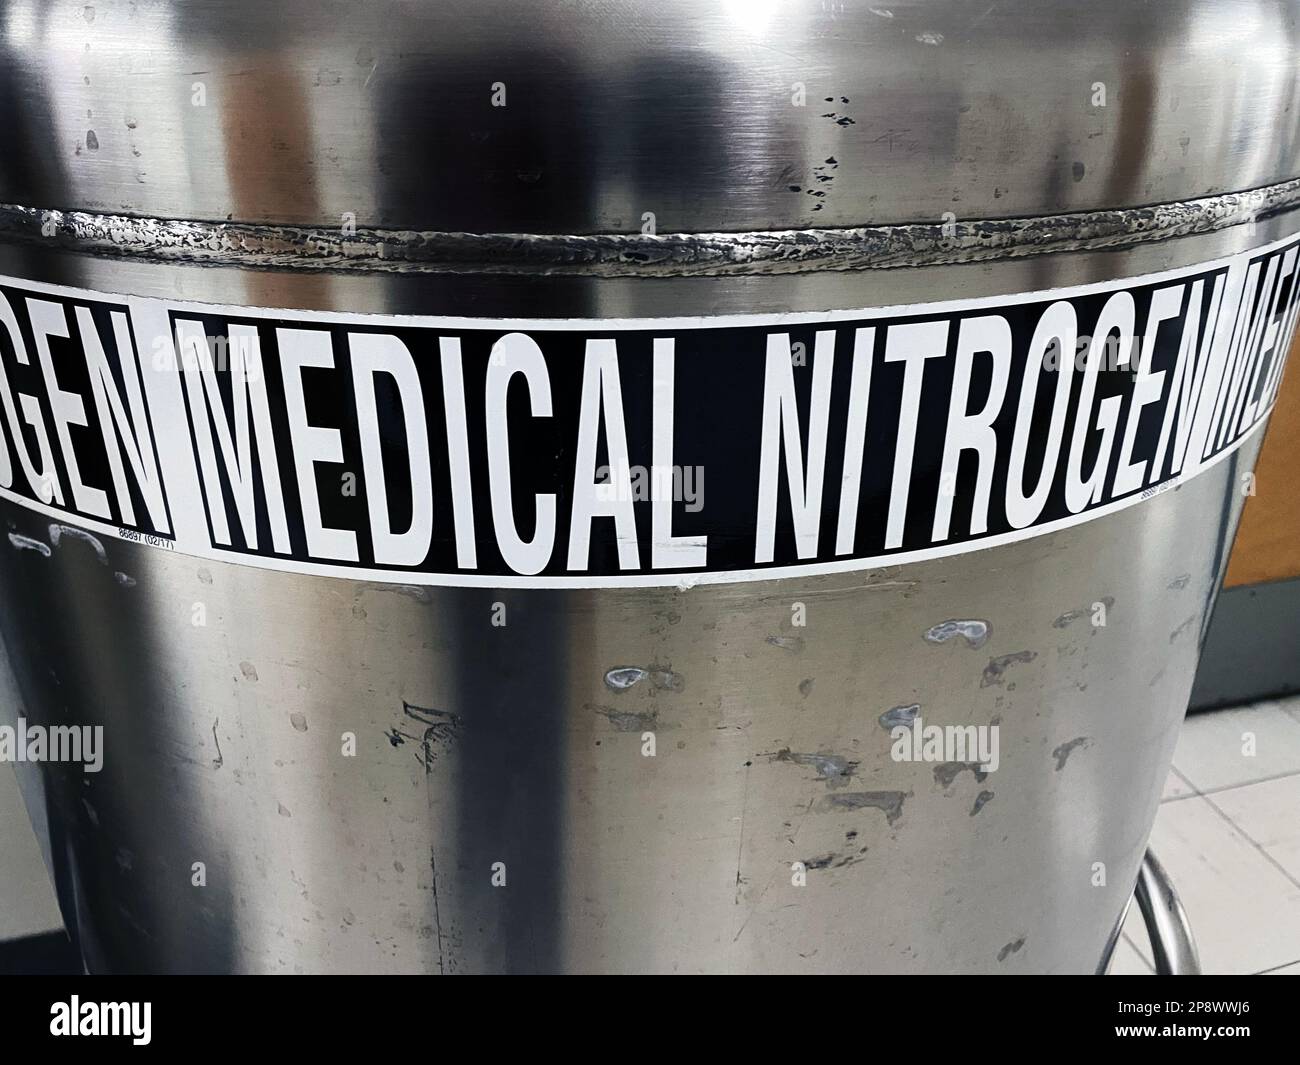 A tank of medical nitrogen Stock Photo